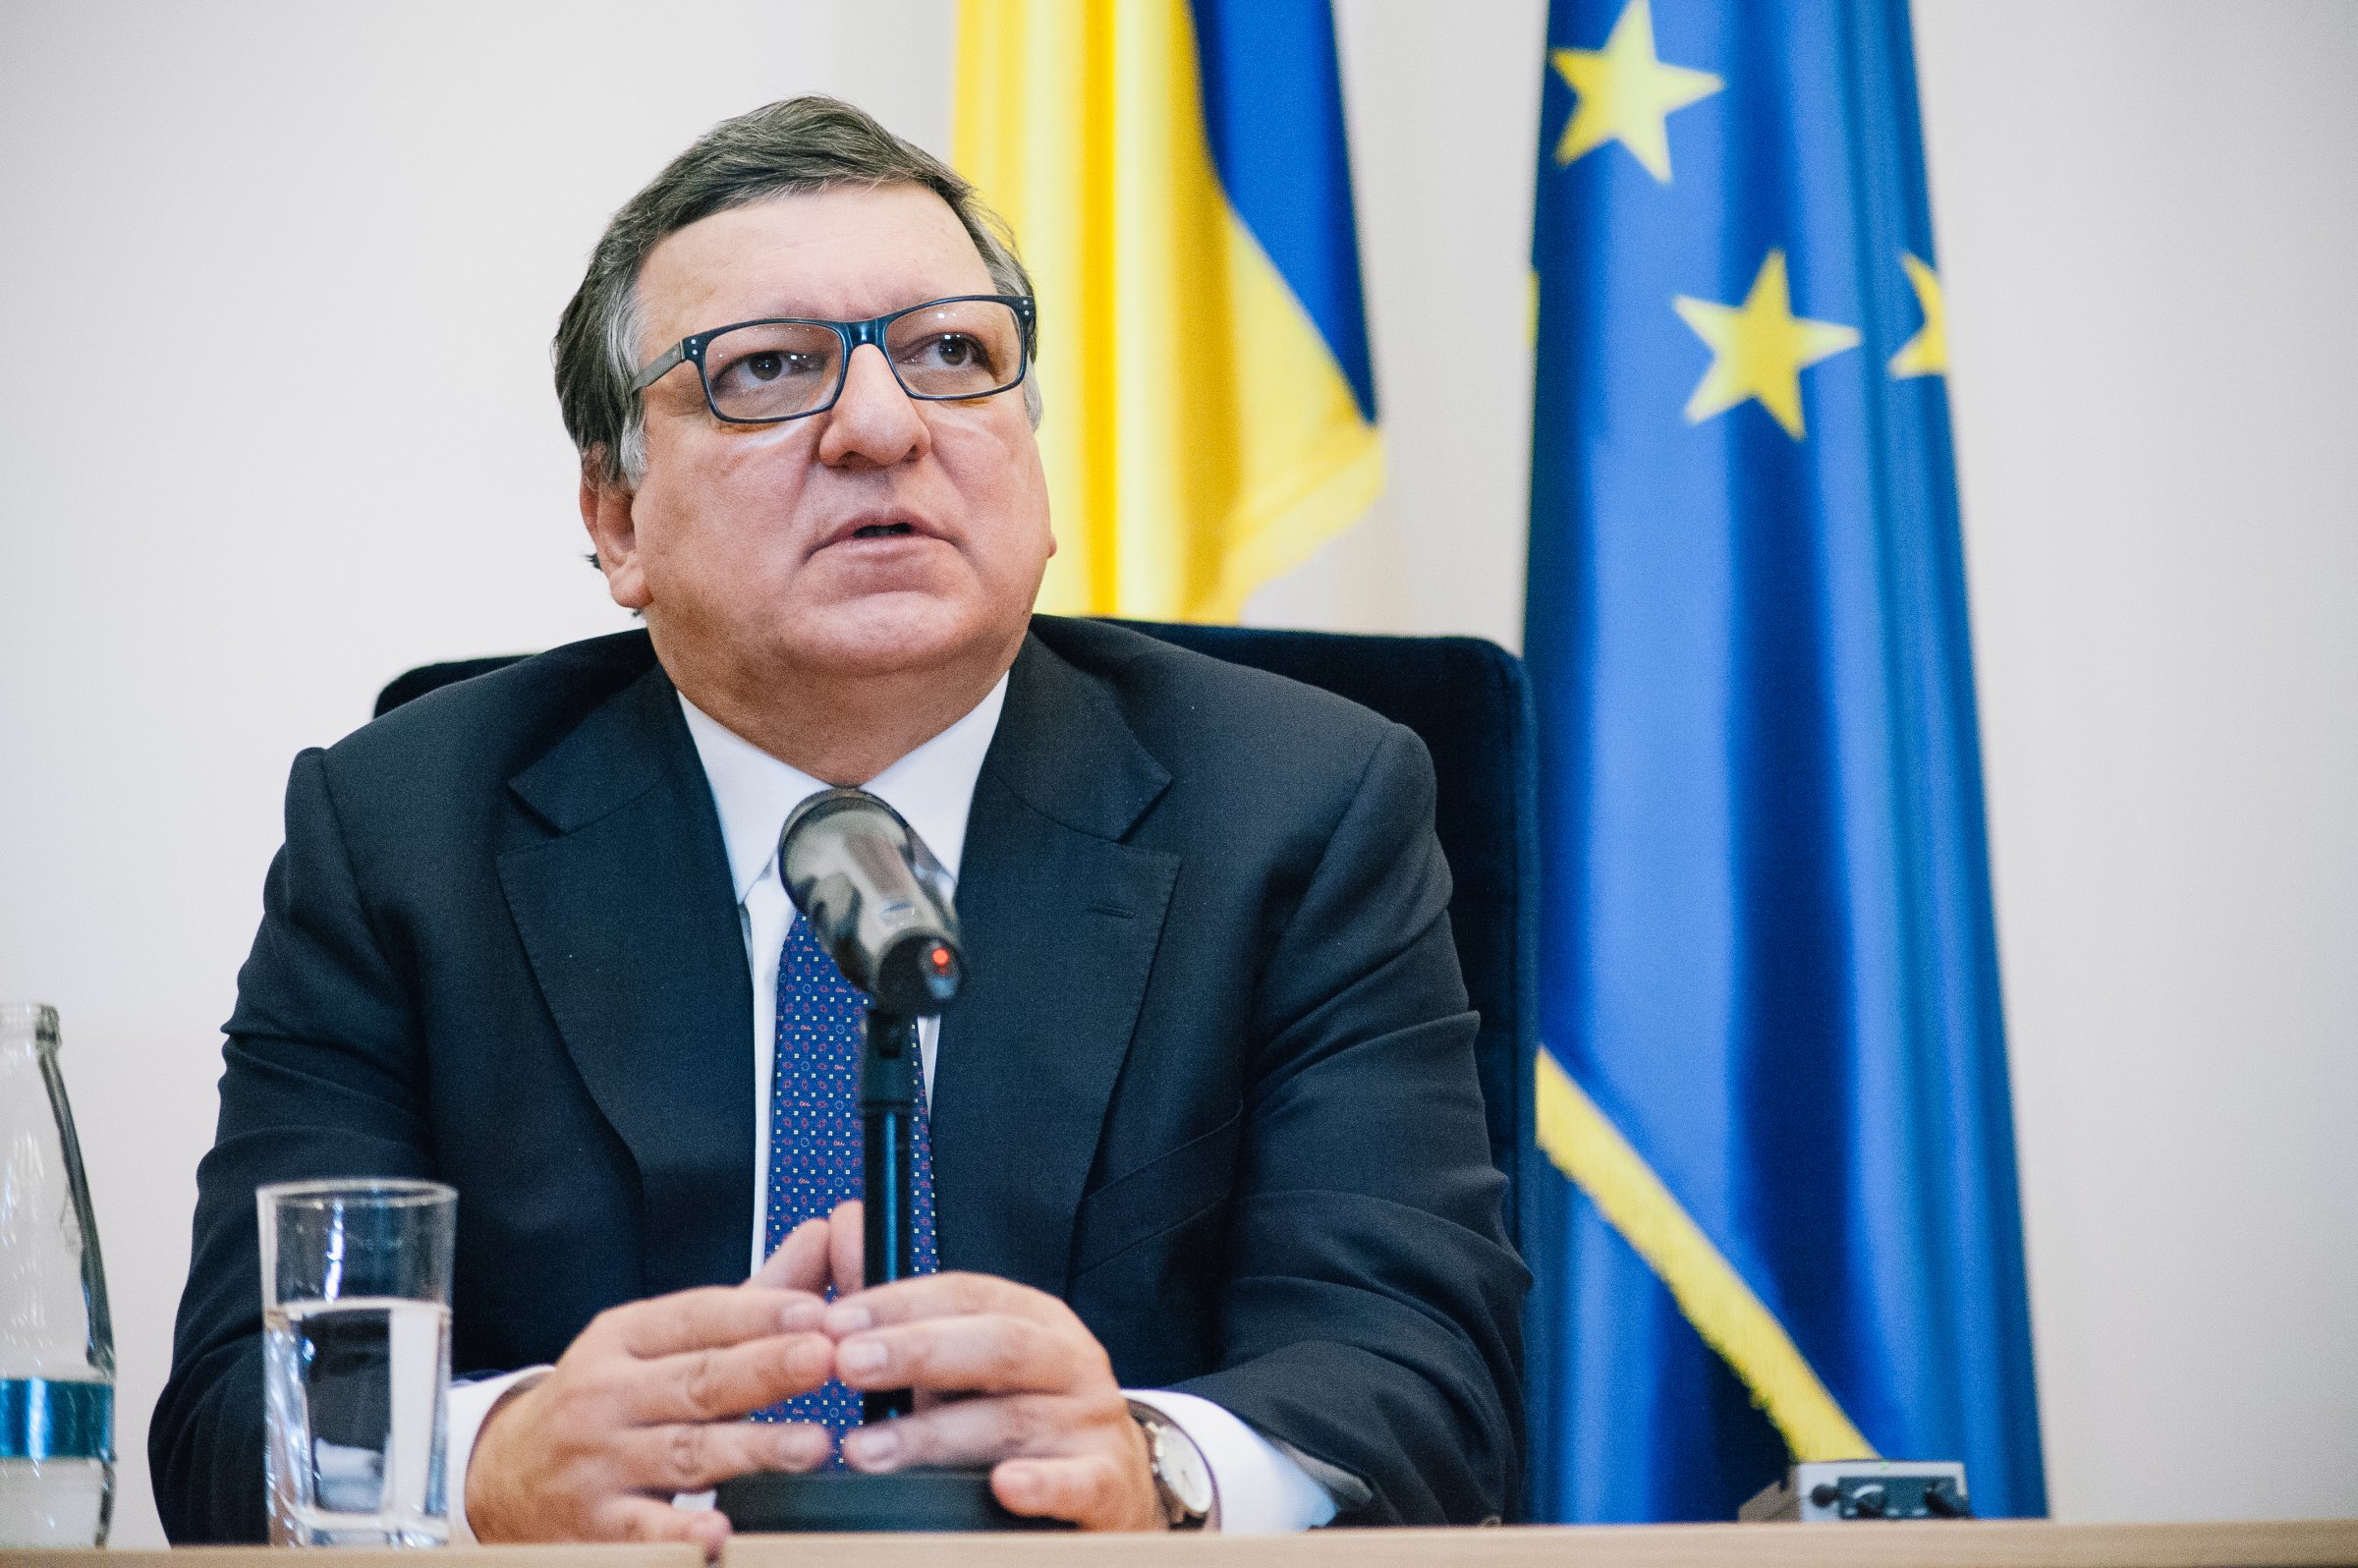 Jose Manuel Barroso is awarded Doctor Honoris Causa